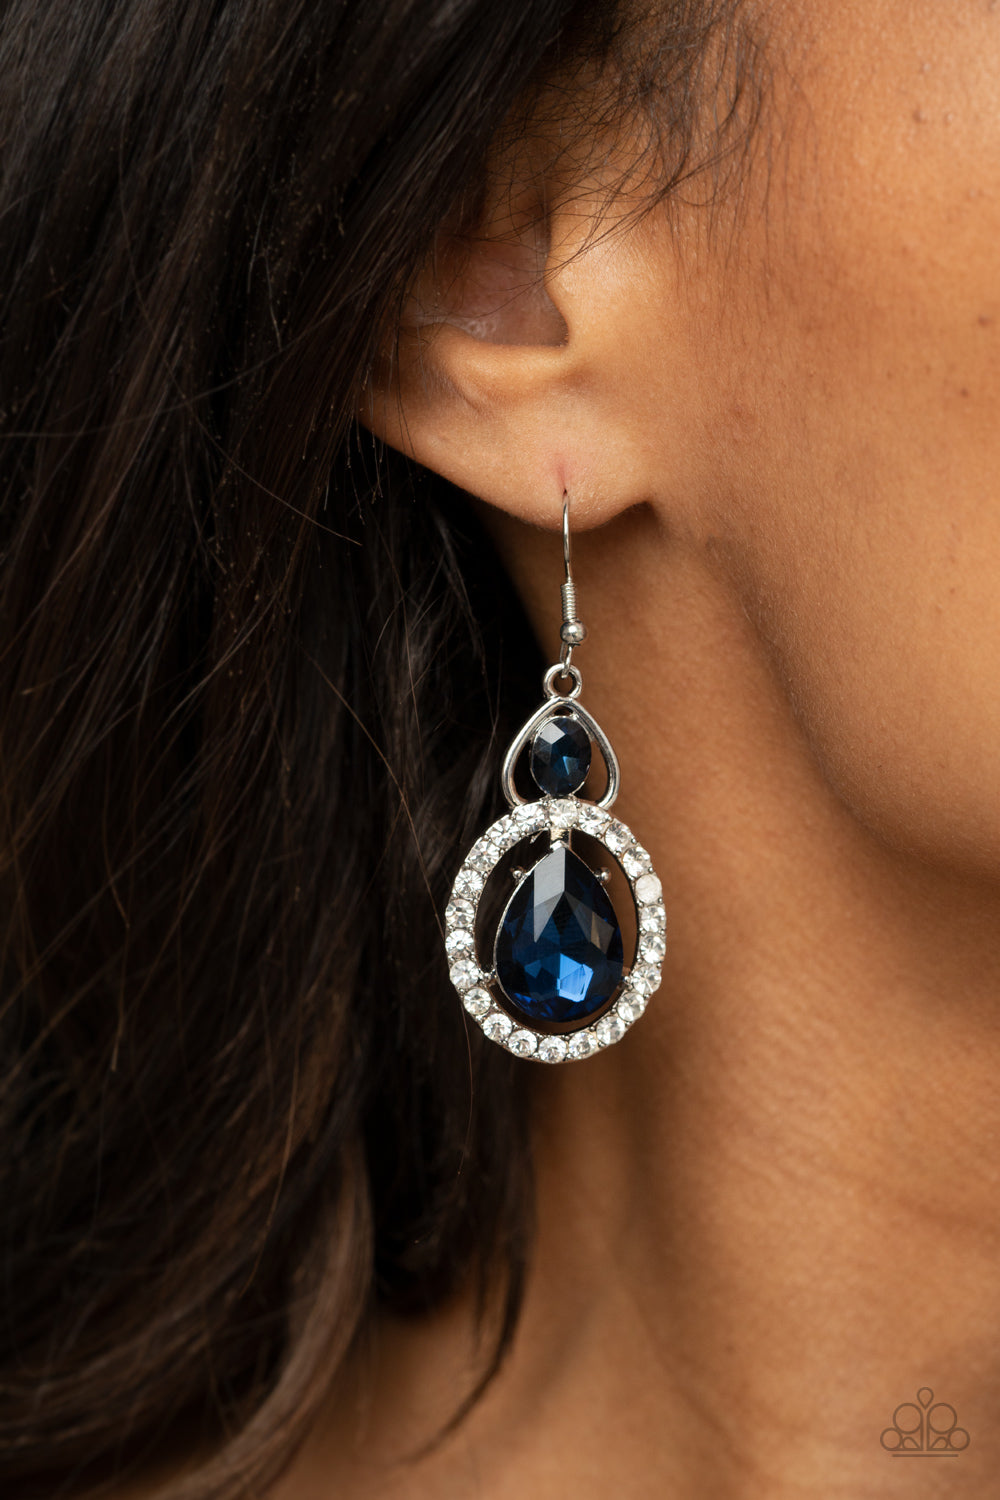 Double The Drama Earrings - Blue